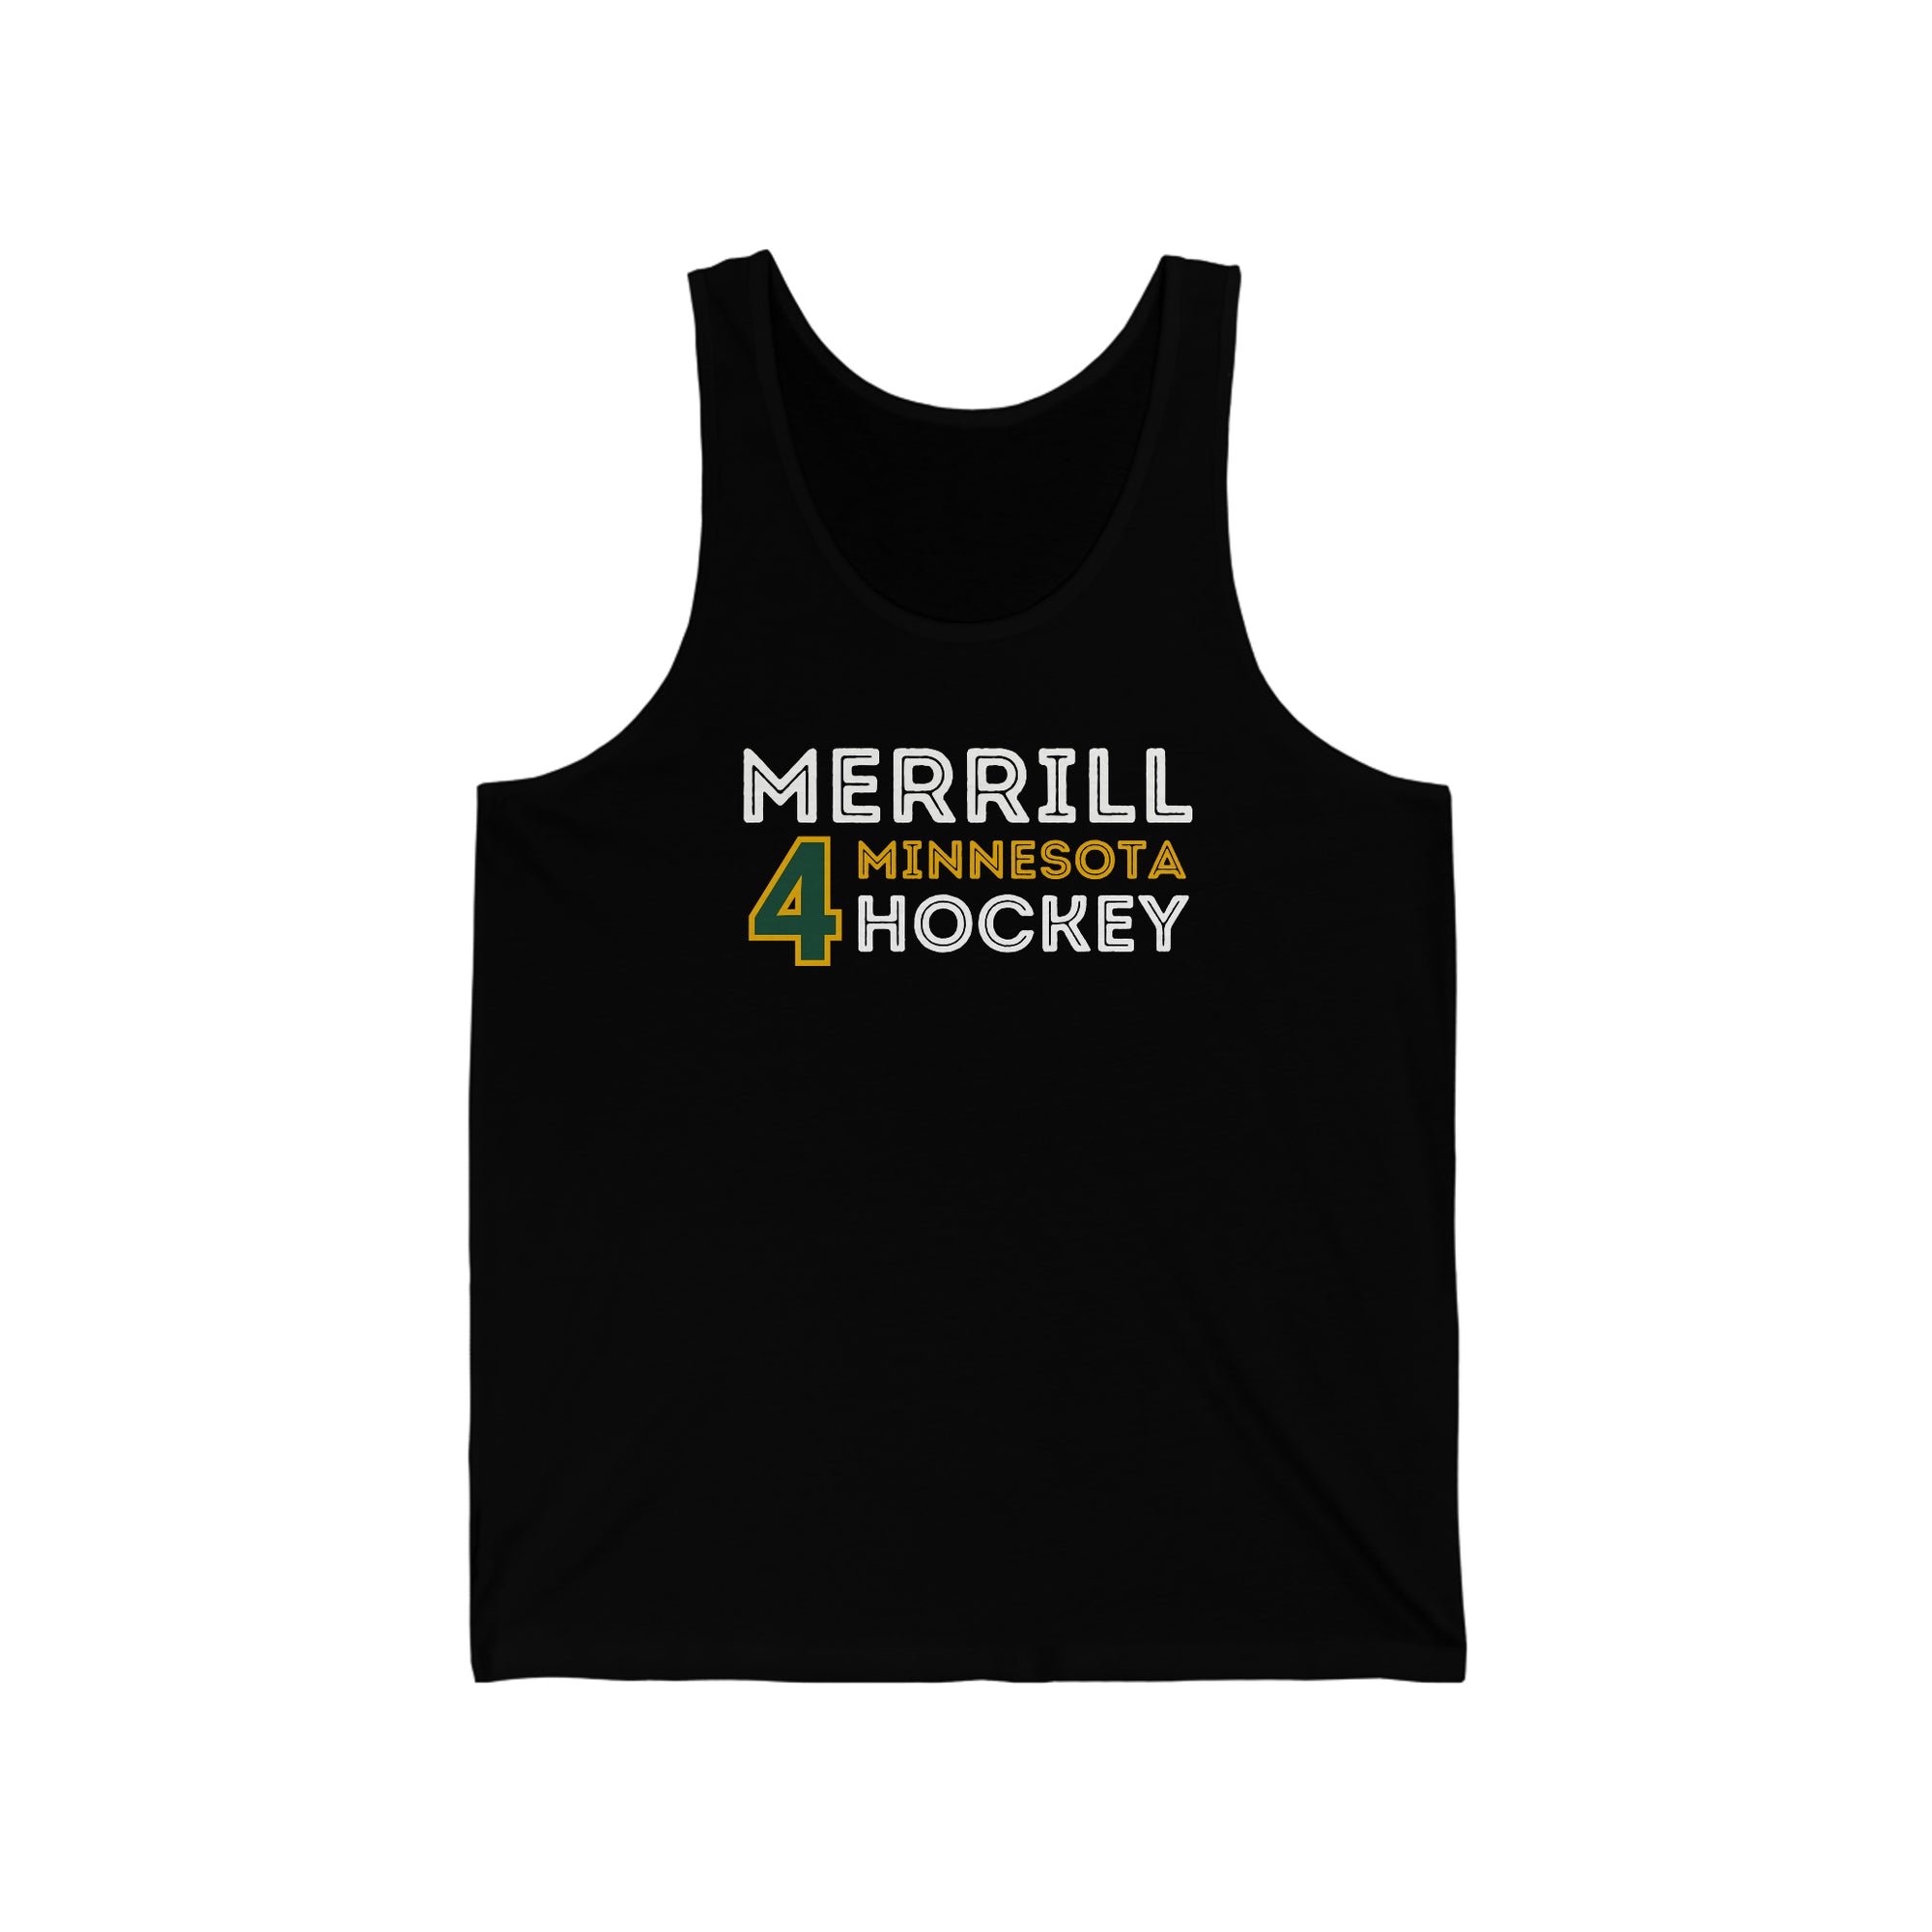 Merrill 4 Minnesota Hockey Grafitti Wall Design Unisex Jersey Tank Top